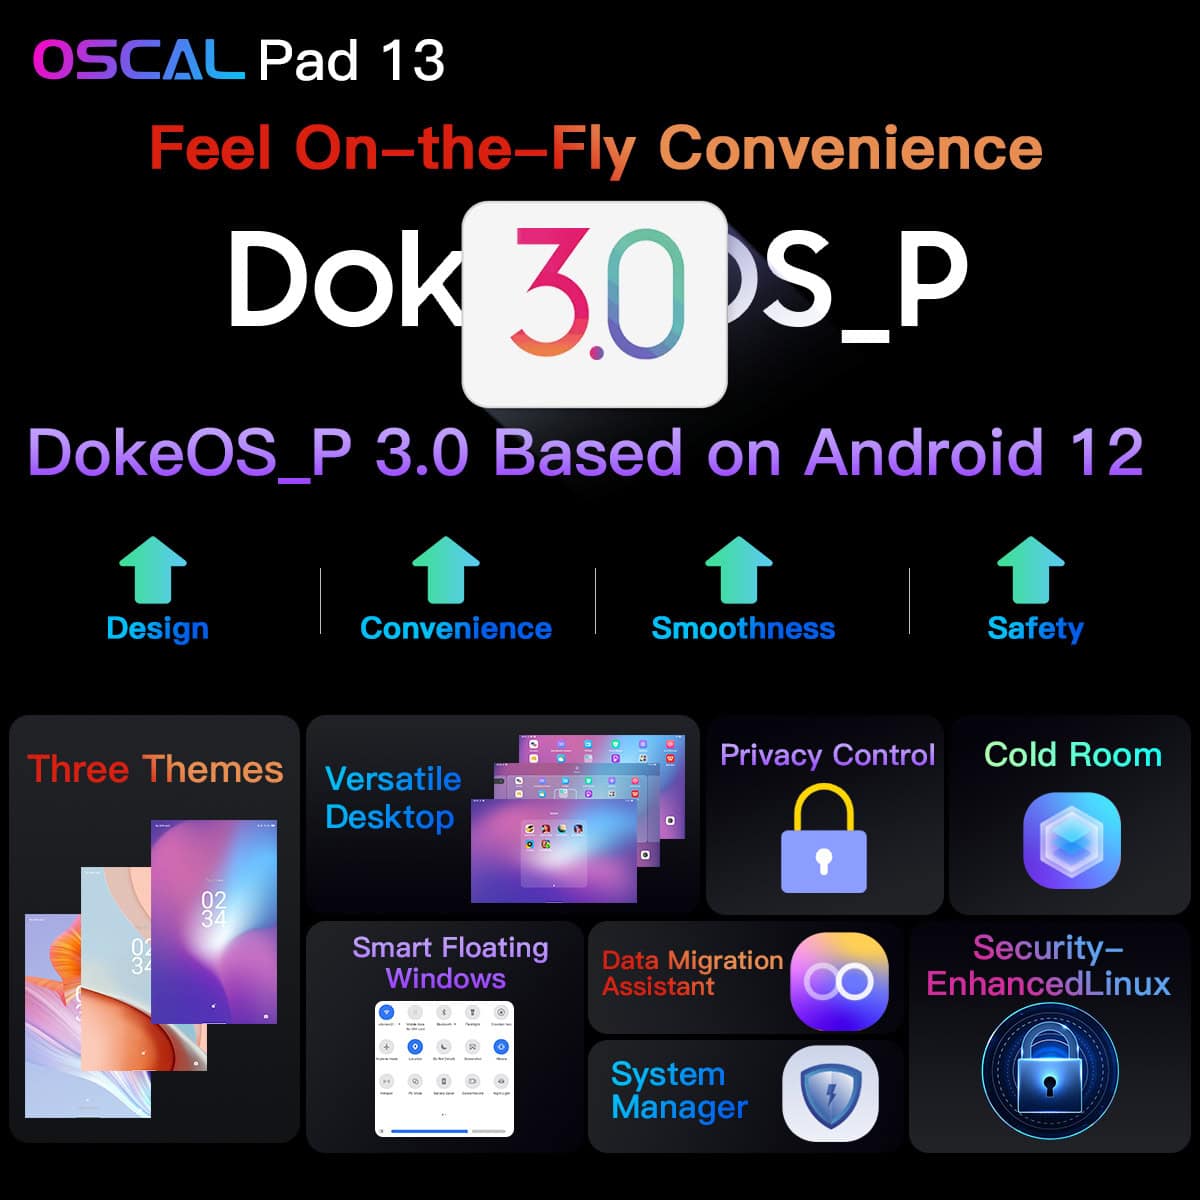 DokeOS_P 3.0 for Oscal Pad 13